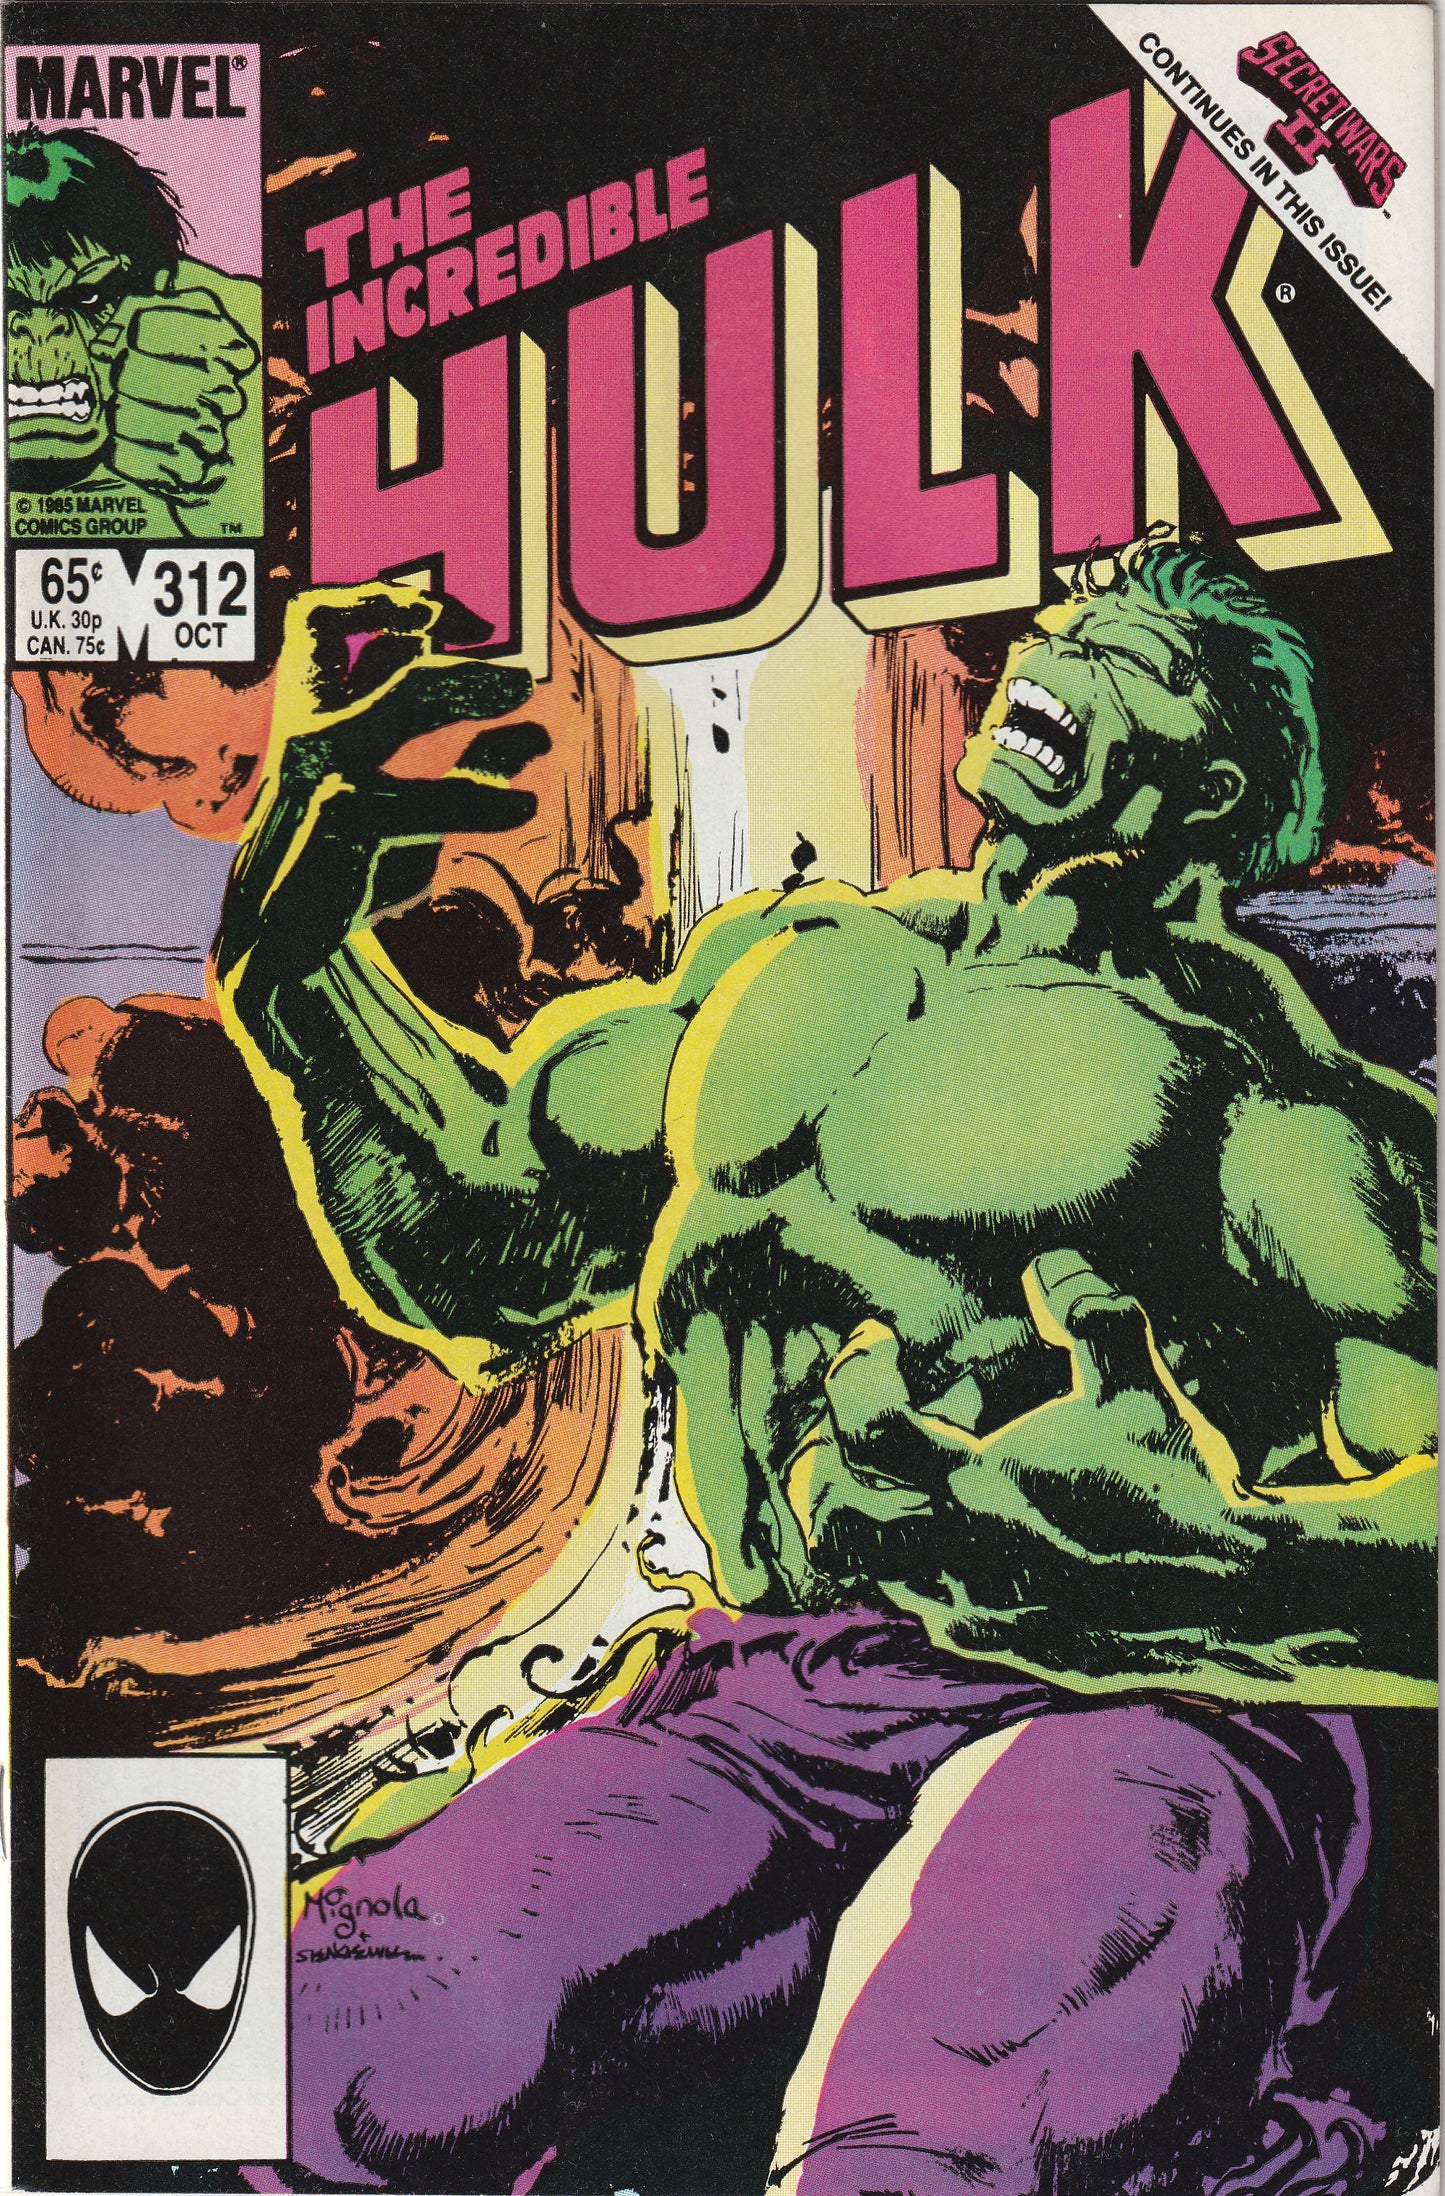 Incredible Hulk #312 (1985) - 1st Full Appearance of Brian Banner, Hulk origin retold